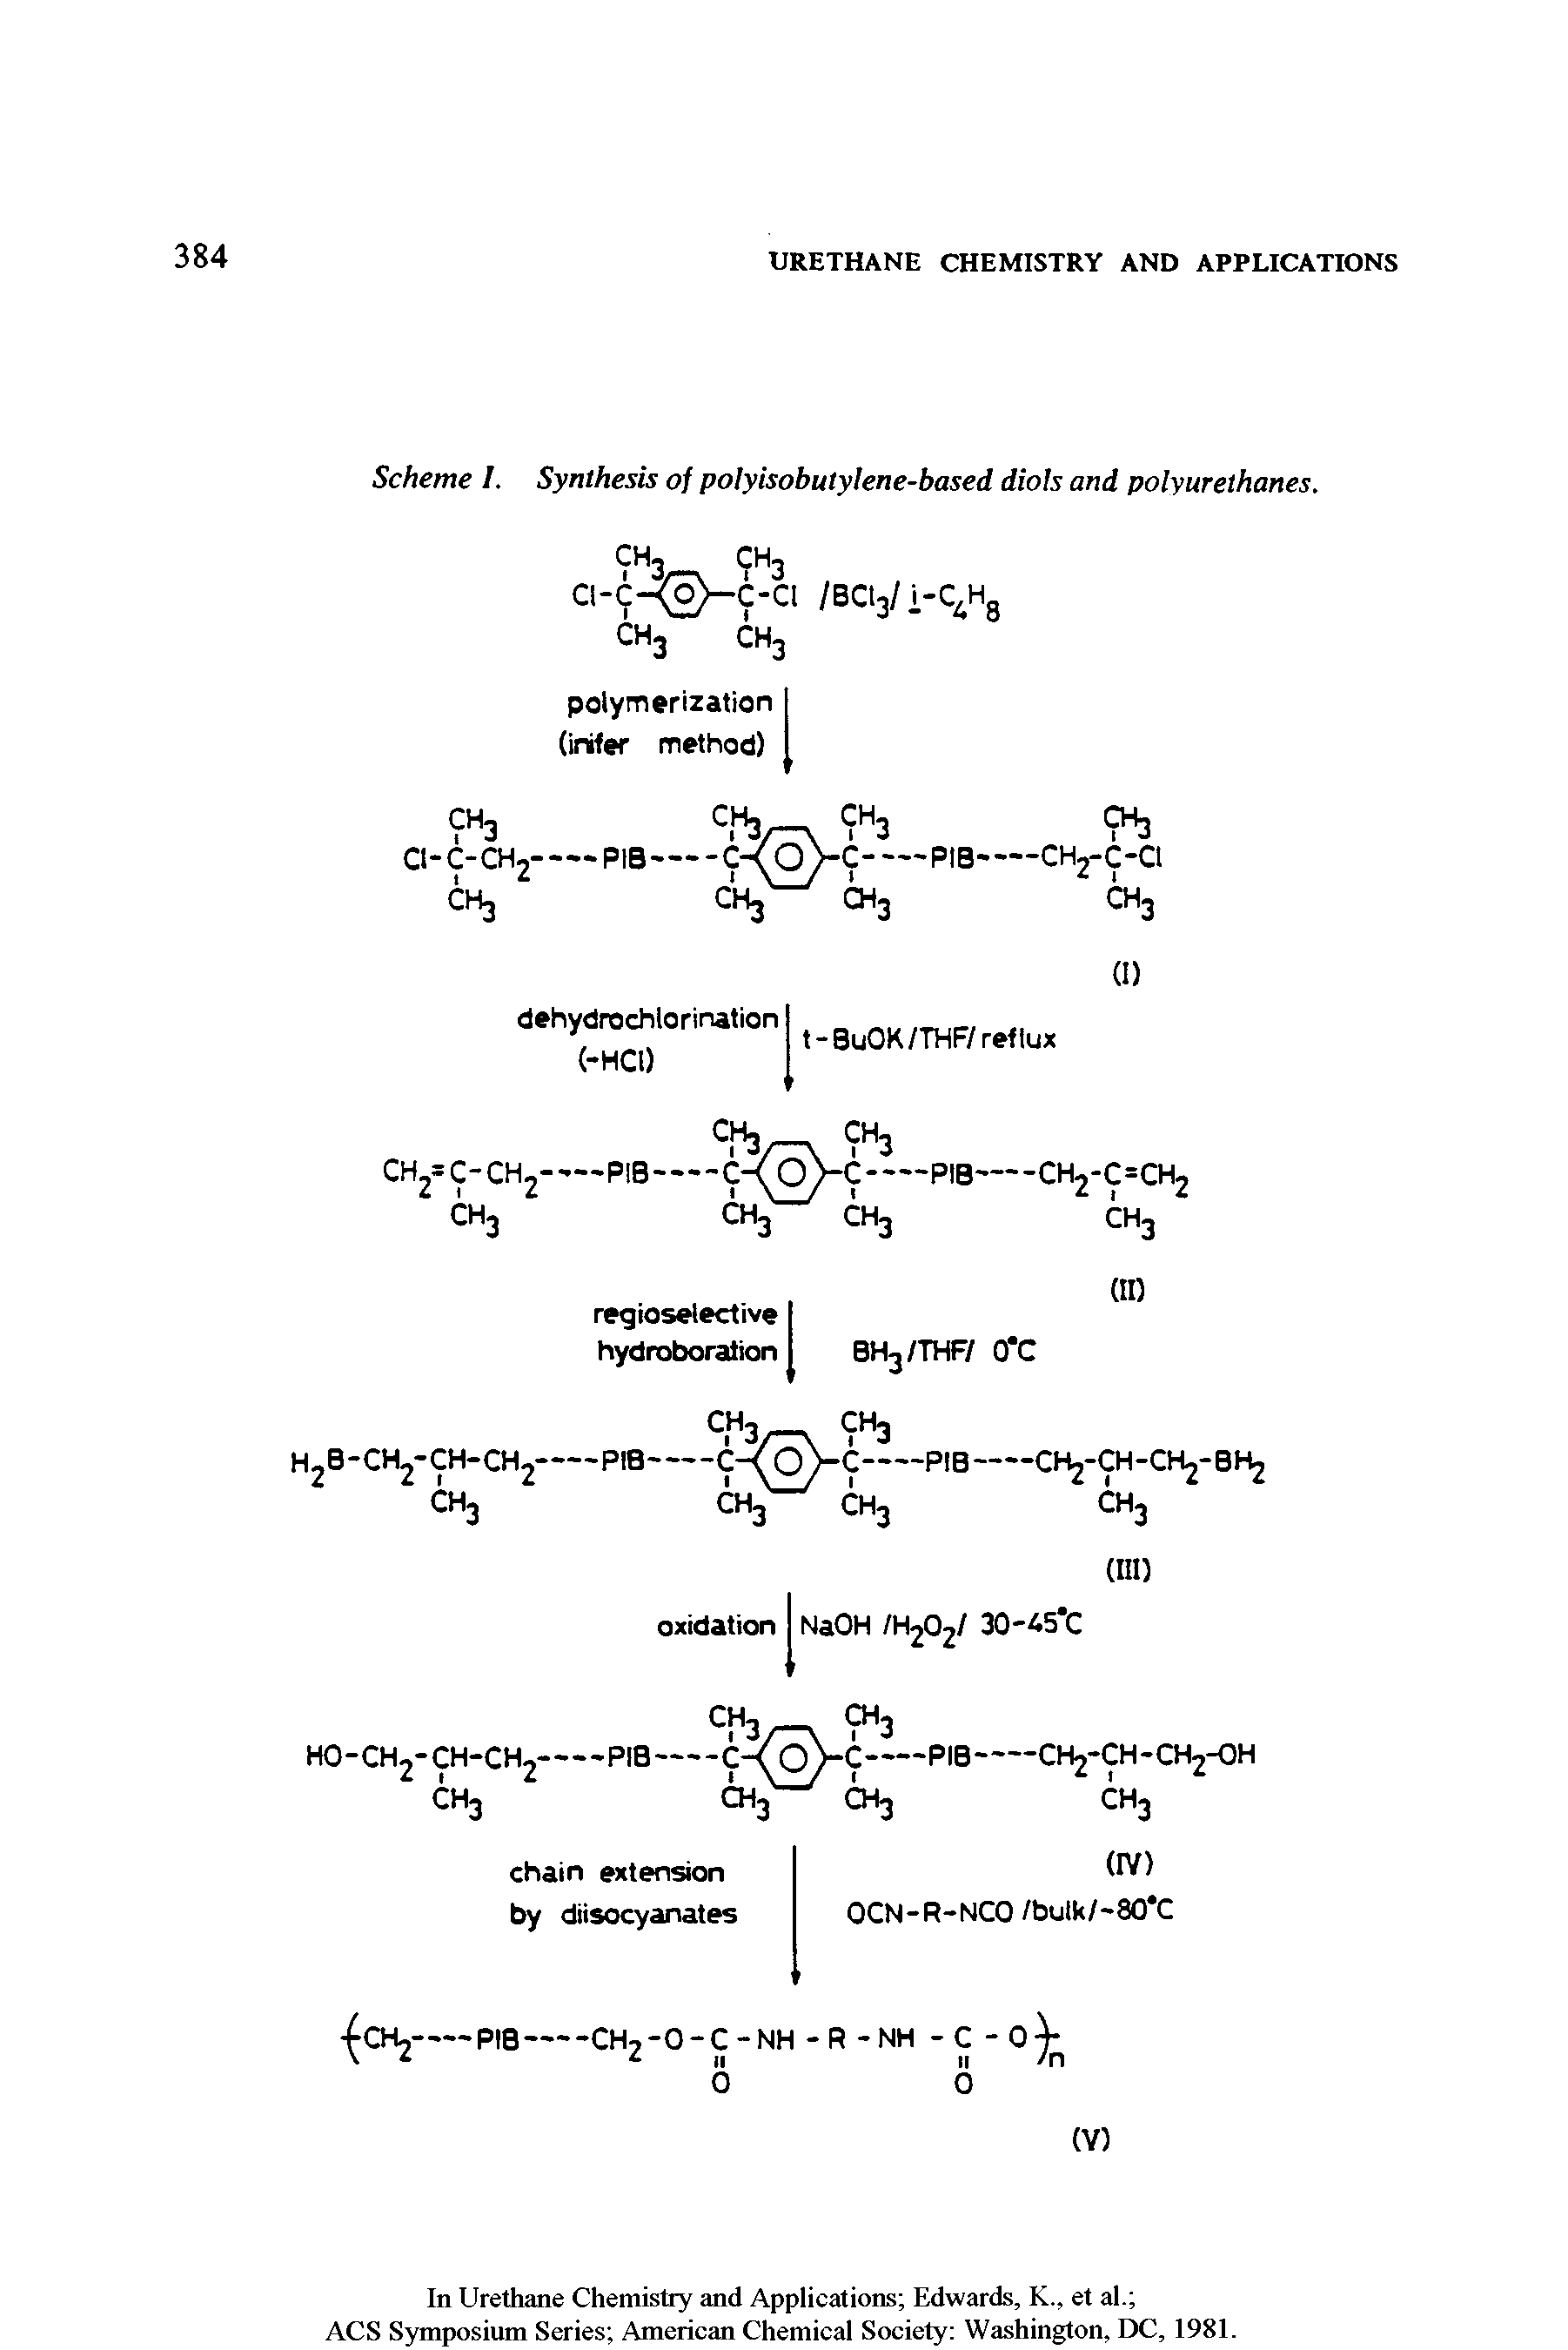 Scheme I. Synthesis of polyisobutylene-based diols and polyurethanes.